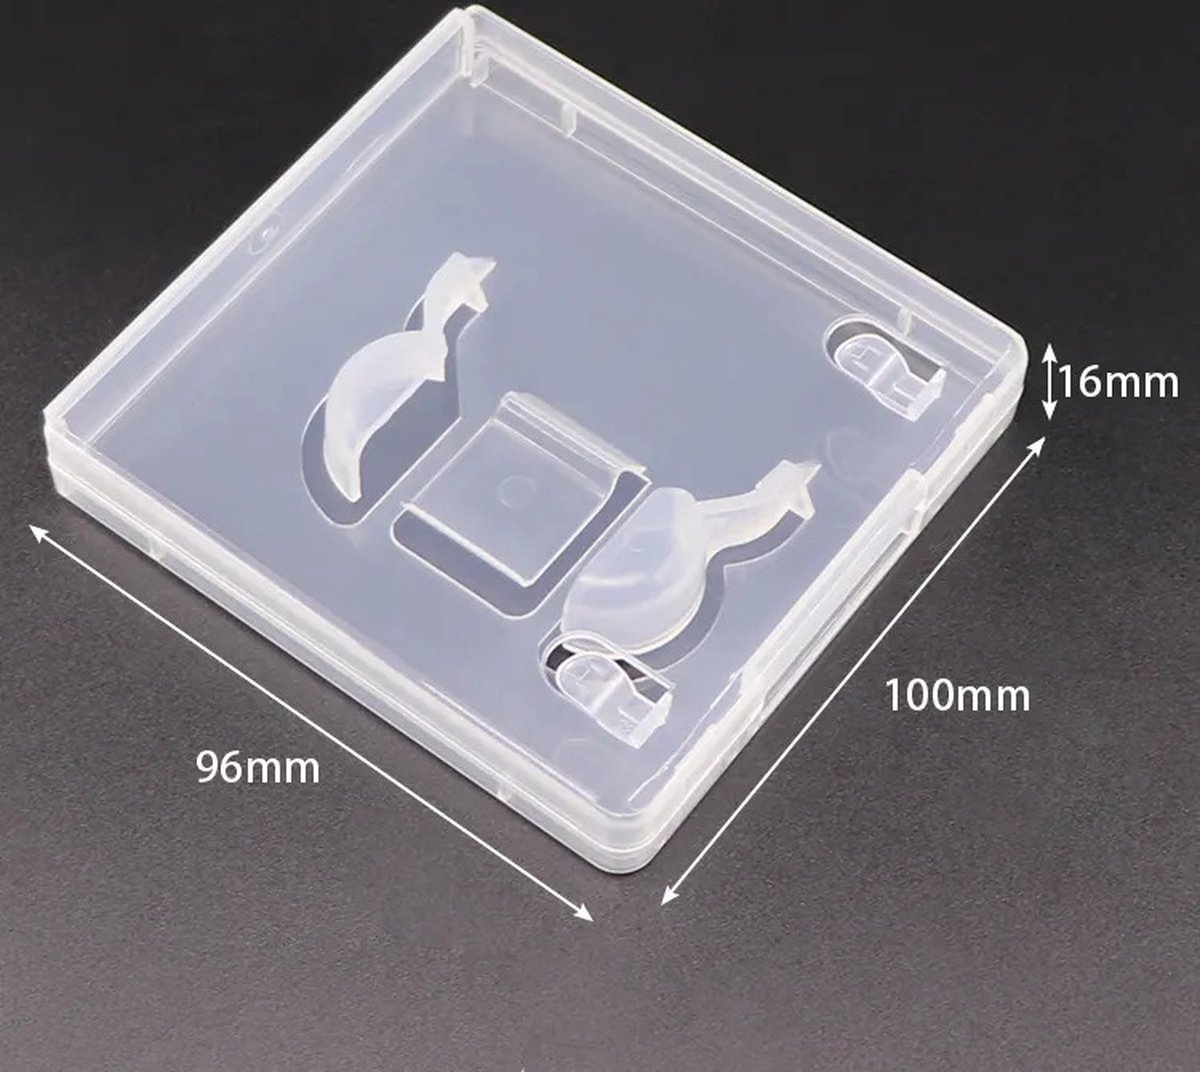 USB case - Hoesje, opbergdoosje voor USB sticks - Stevig, wit, transparant  [5 stuks] | bol.com